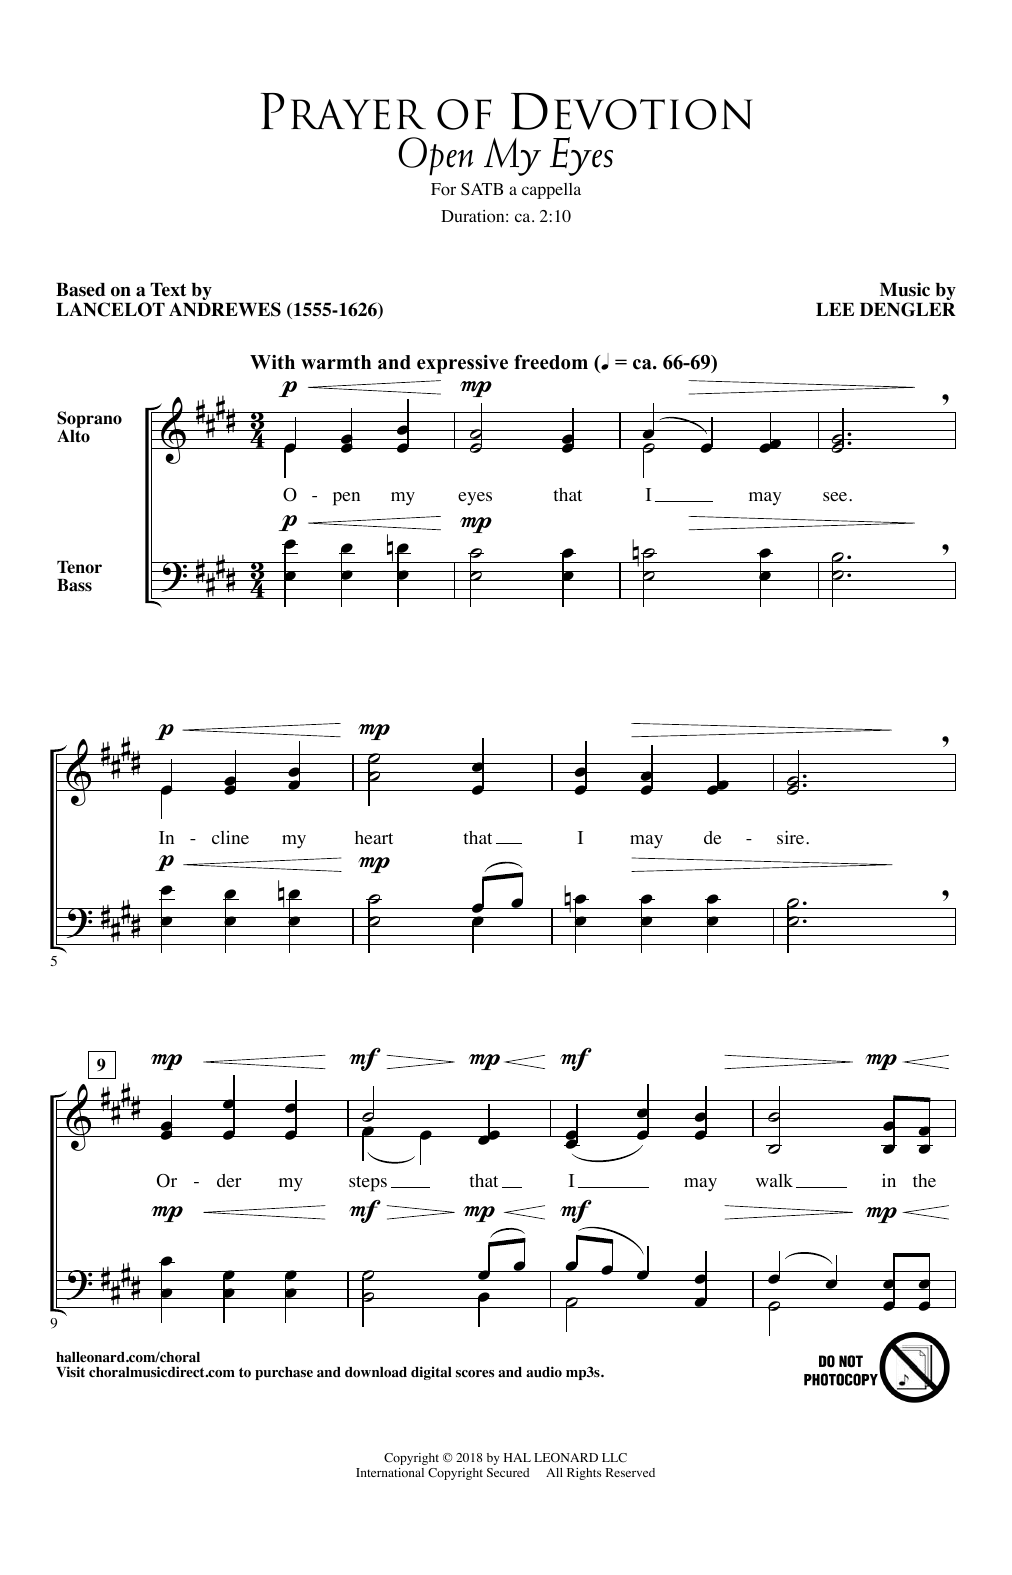 Lee Dengler Prayer Of Devotion (Open My Eyes) sheet music notes and chords arranged for SATB Choir